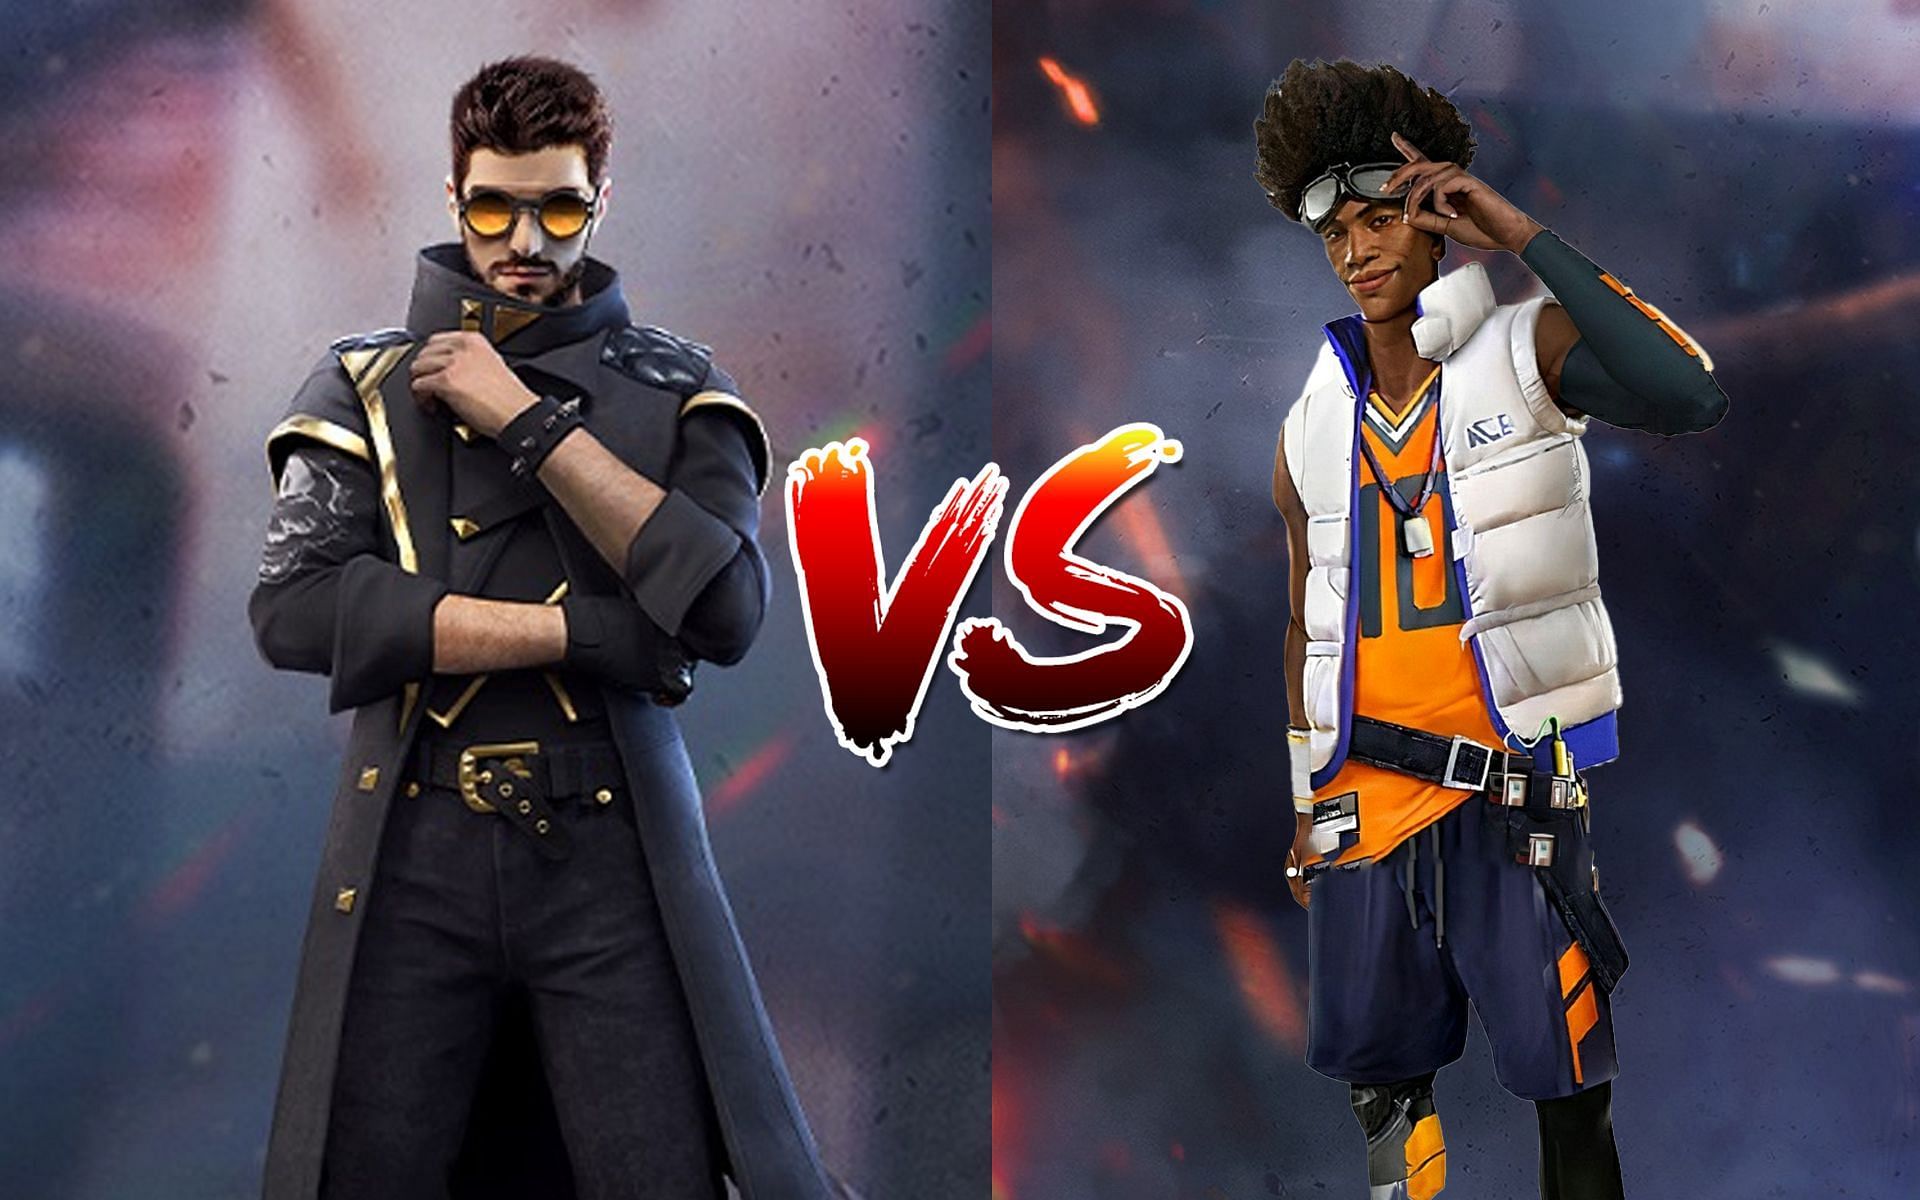 DJ Alok vs Leon: Which Free Fire character is better? (Image via Sportskeeda)